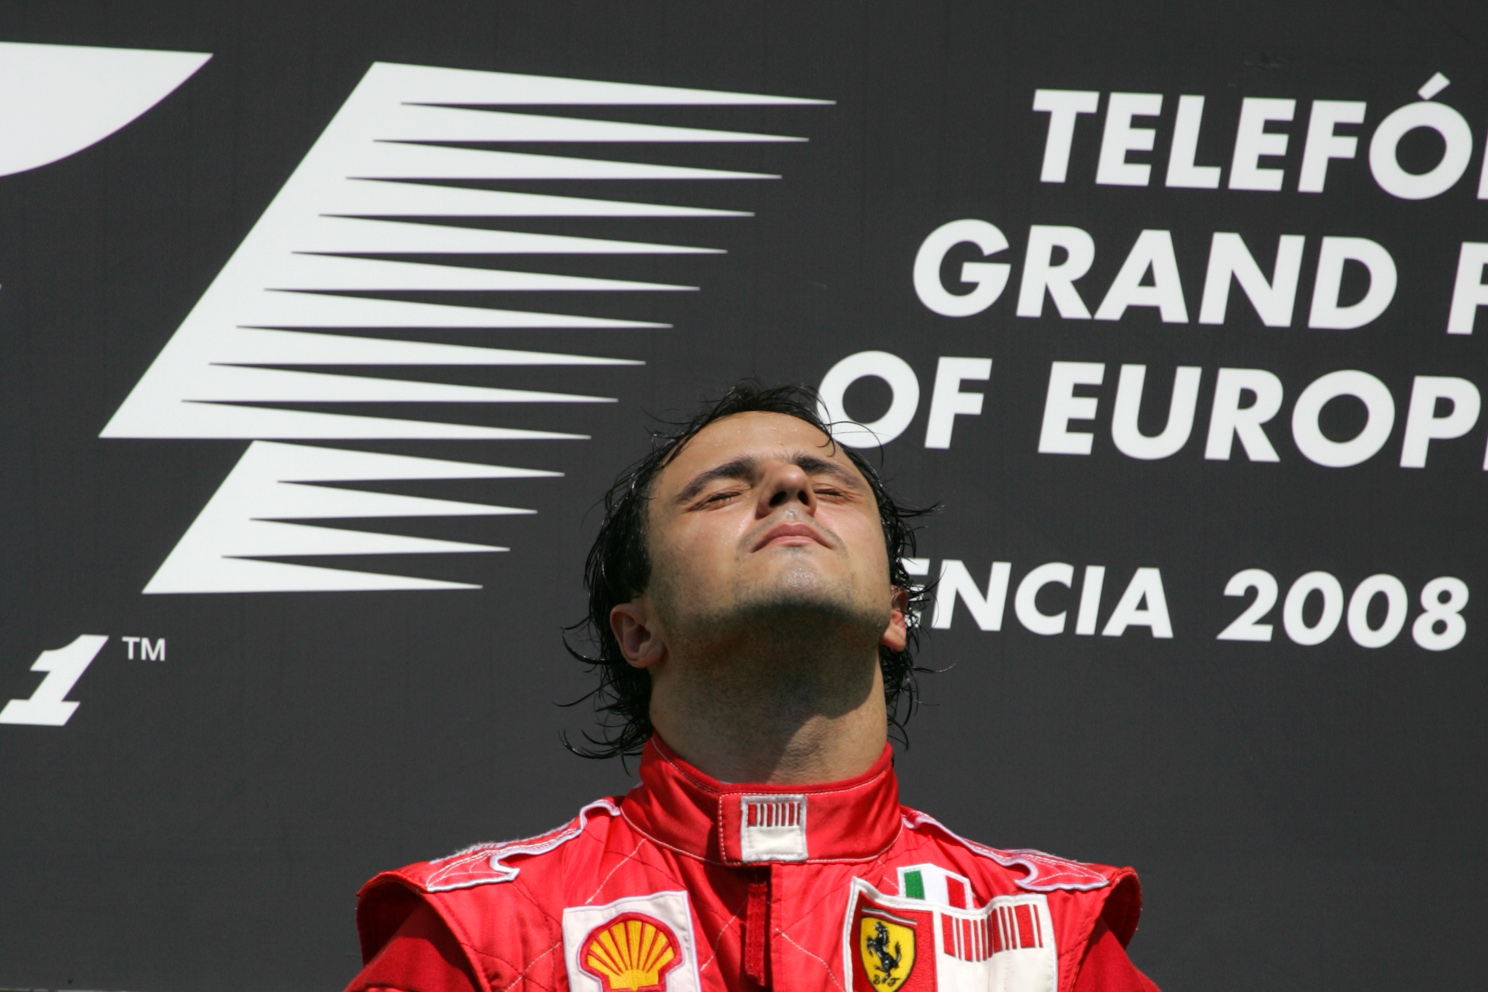 Felipe Massa soaks up the glory, and sun. At the 2008 European Grand Prix.